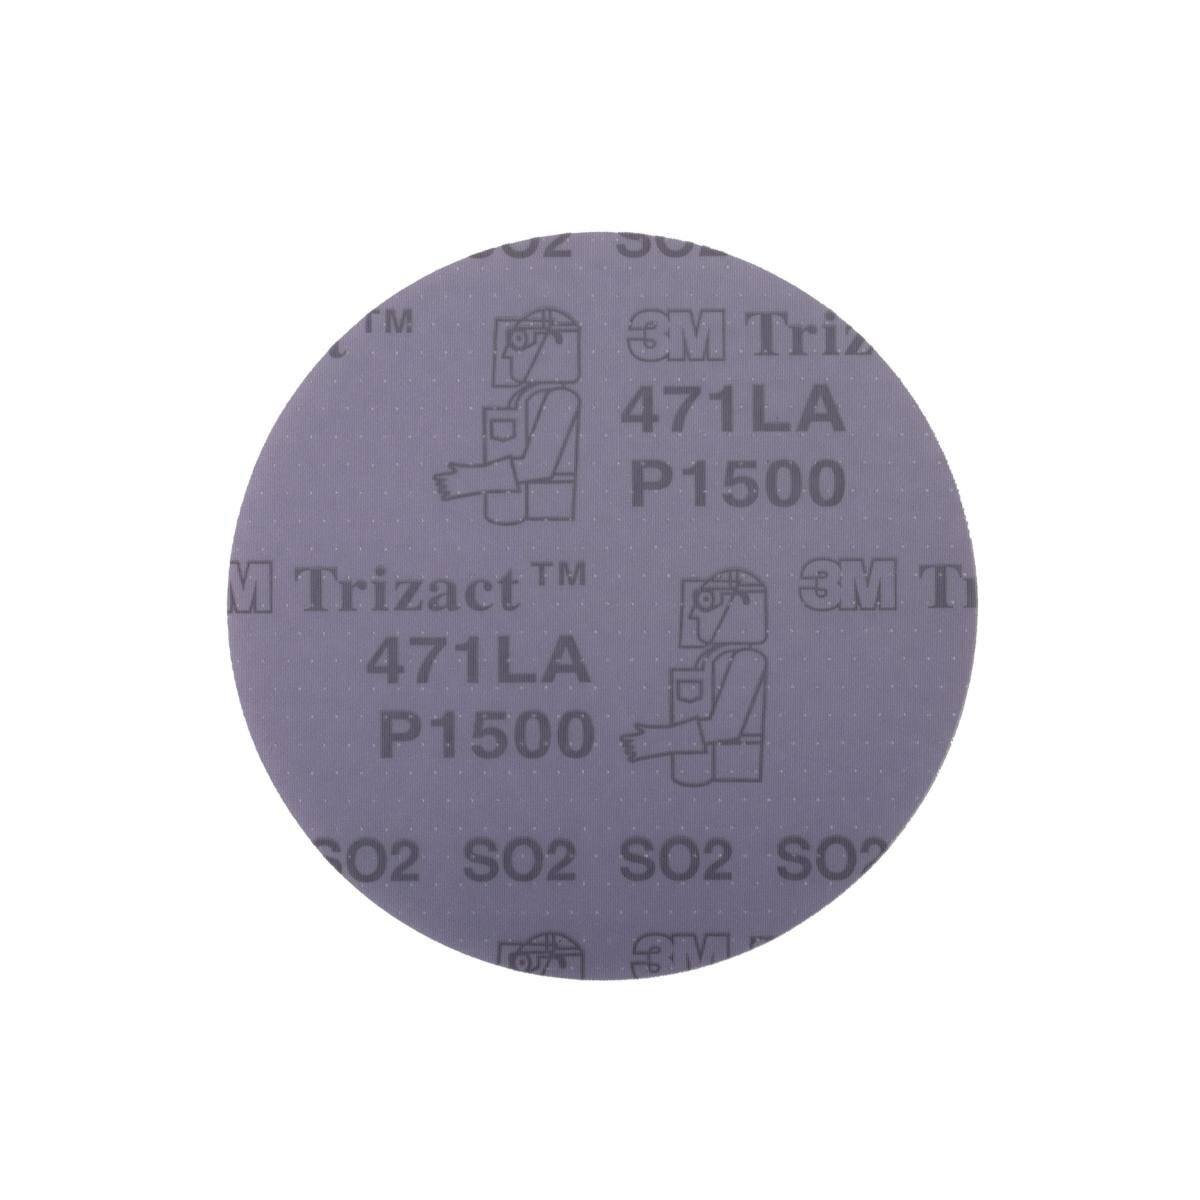 3M Hookit Trizact Schleifscheibe 471LA, 75 mm, entspricht P1500 #05601